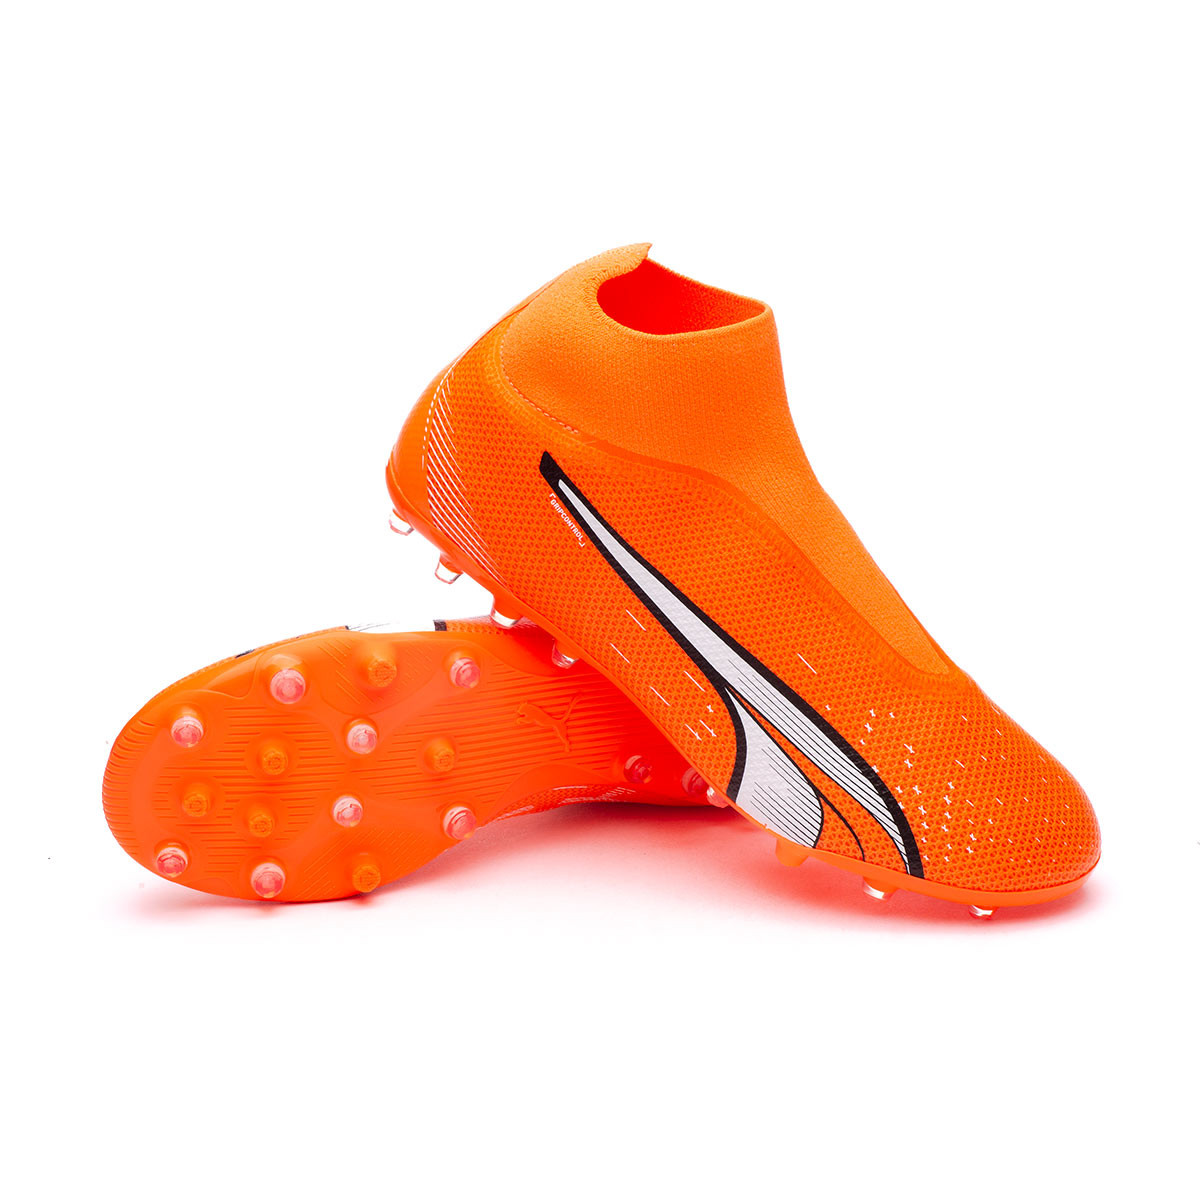 Fútbol Glimmer LL Ultra Ultra Match+ Orange-White-Blue Boots Football MG Emotion Puma -